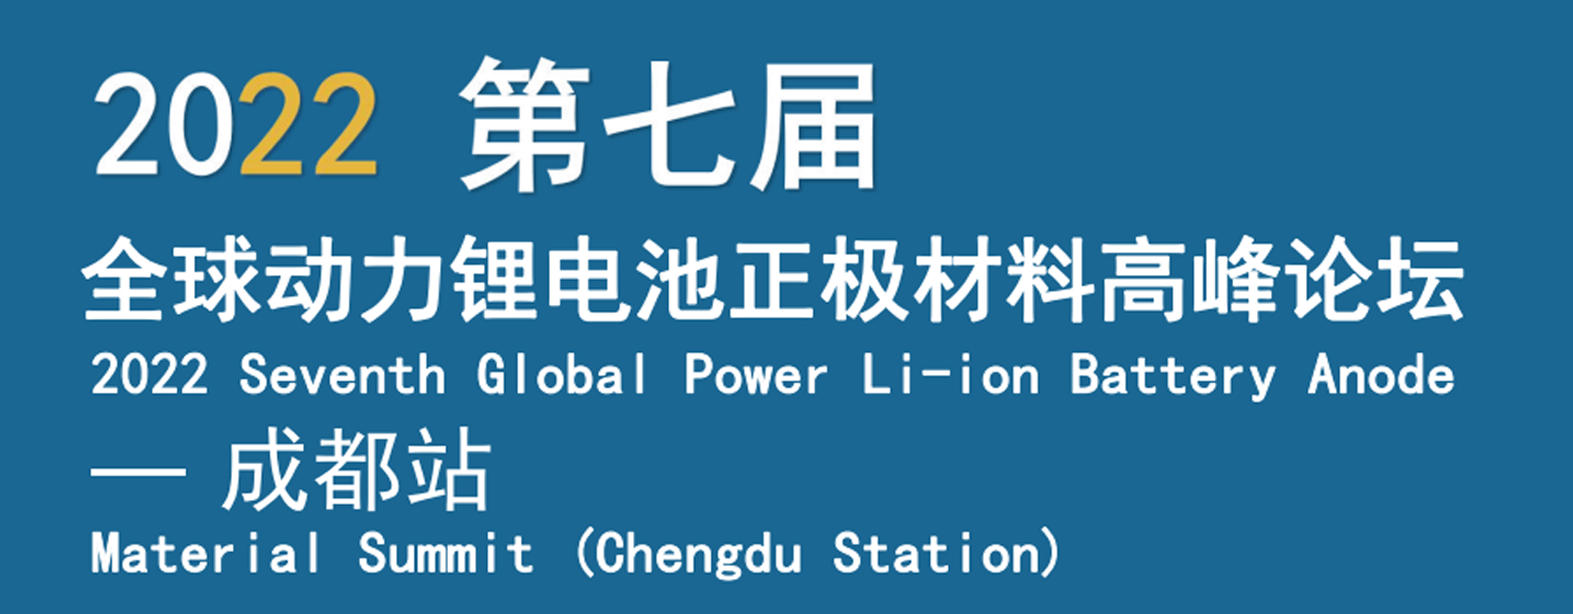 2022 Seventh Global Power Li-ion Battery Anode